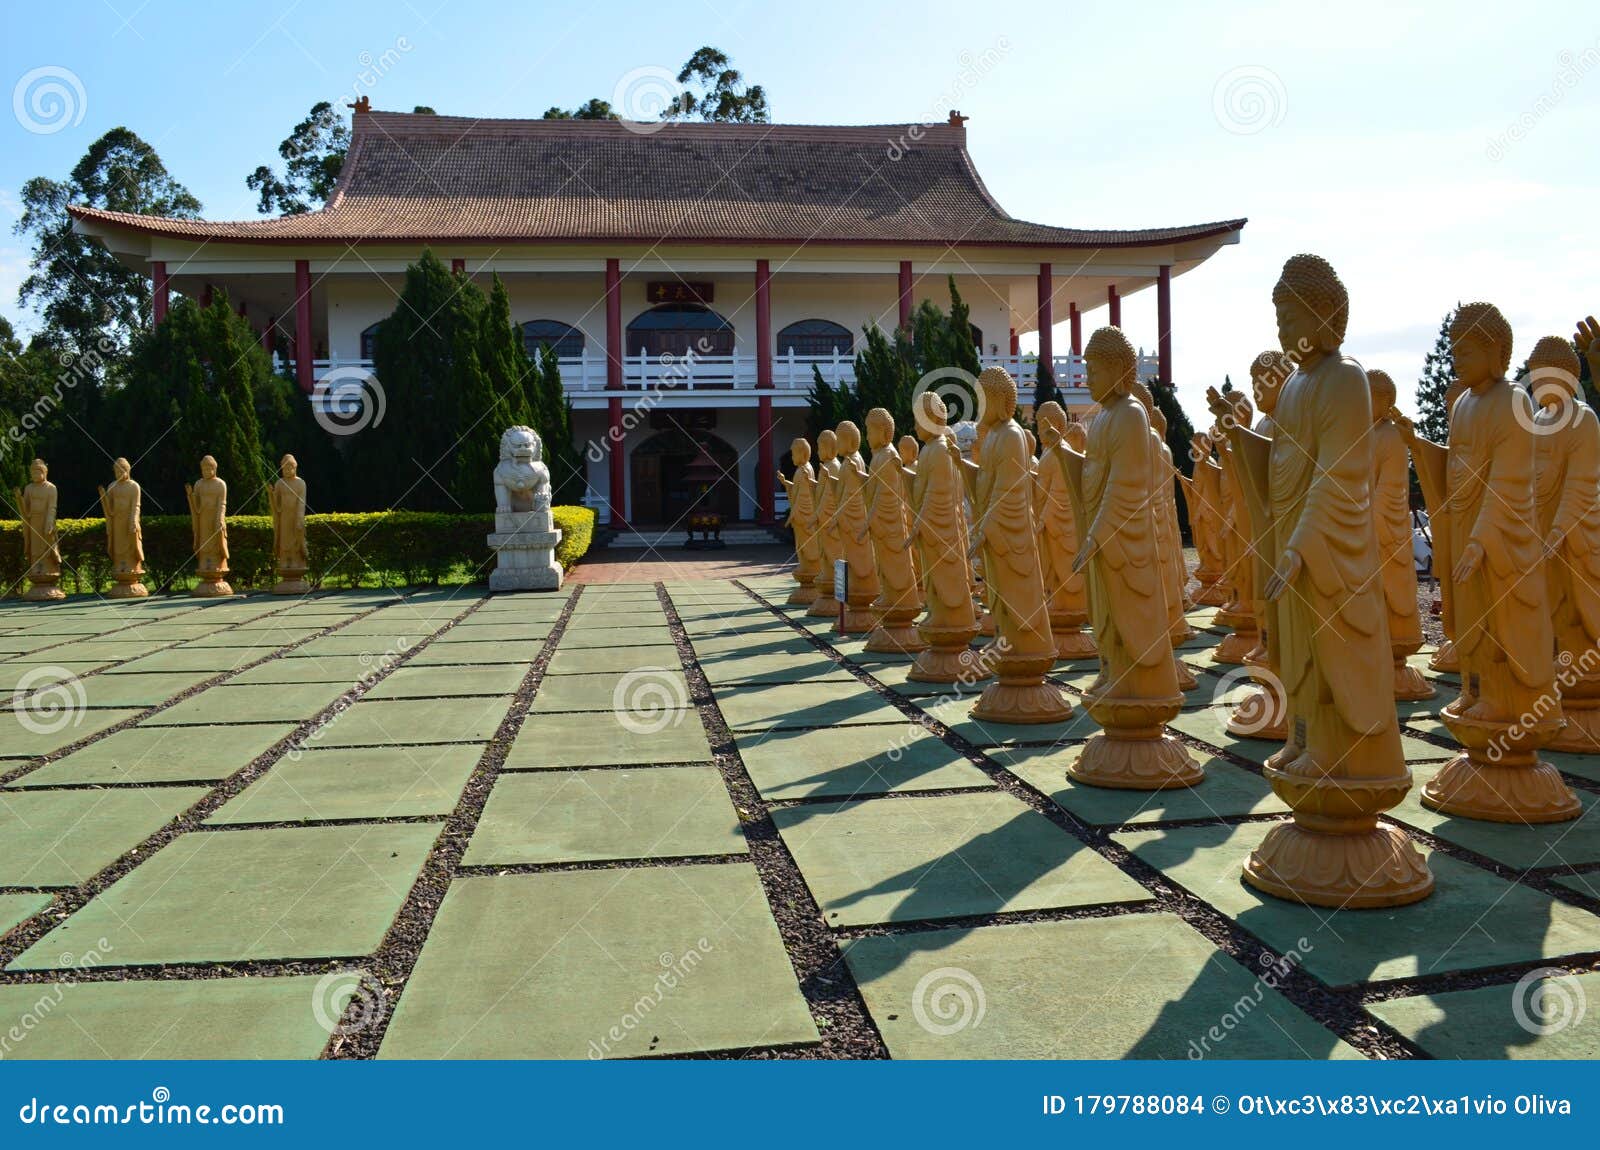 statues in the buddhist temple of iguassu falls, brazil.